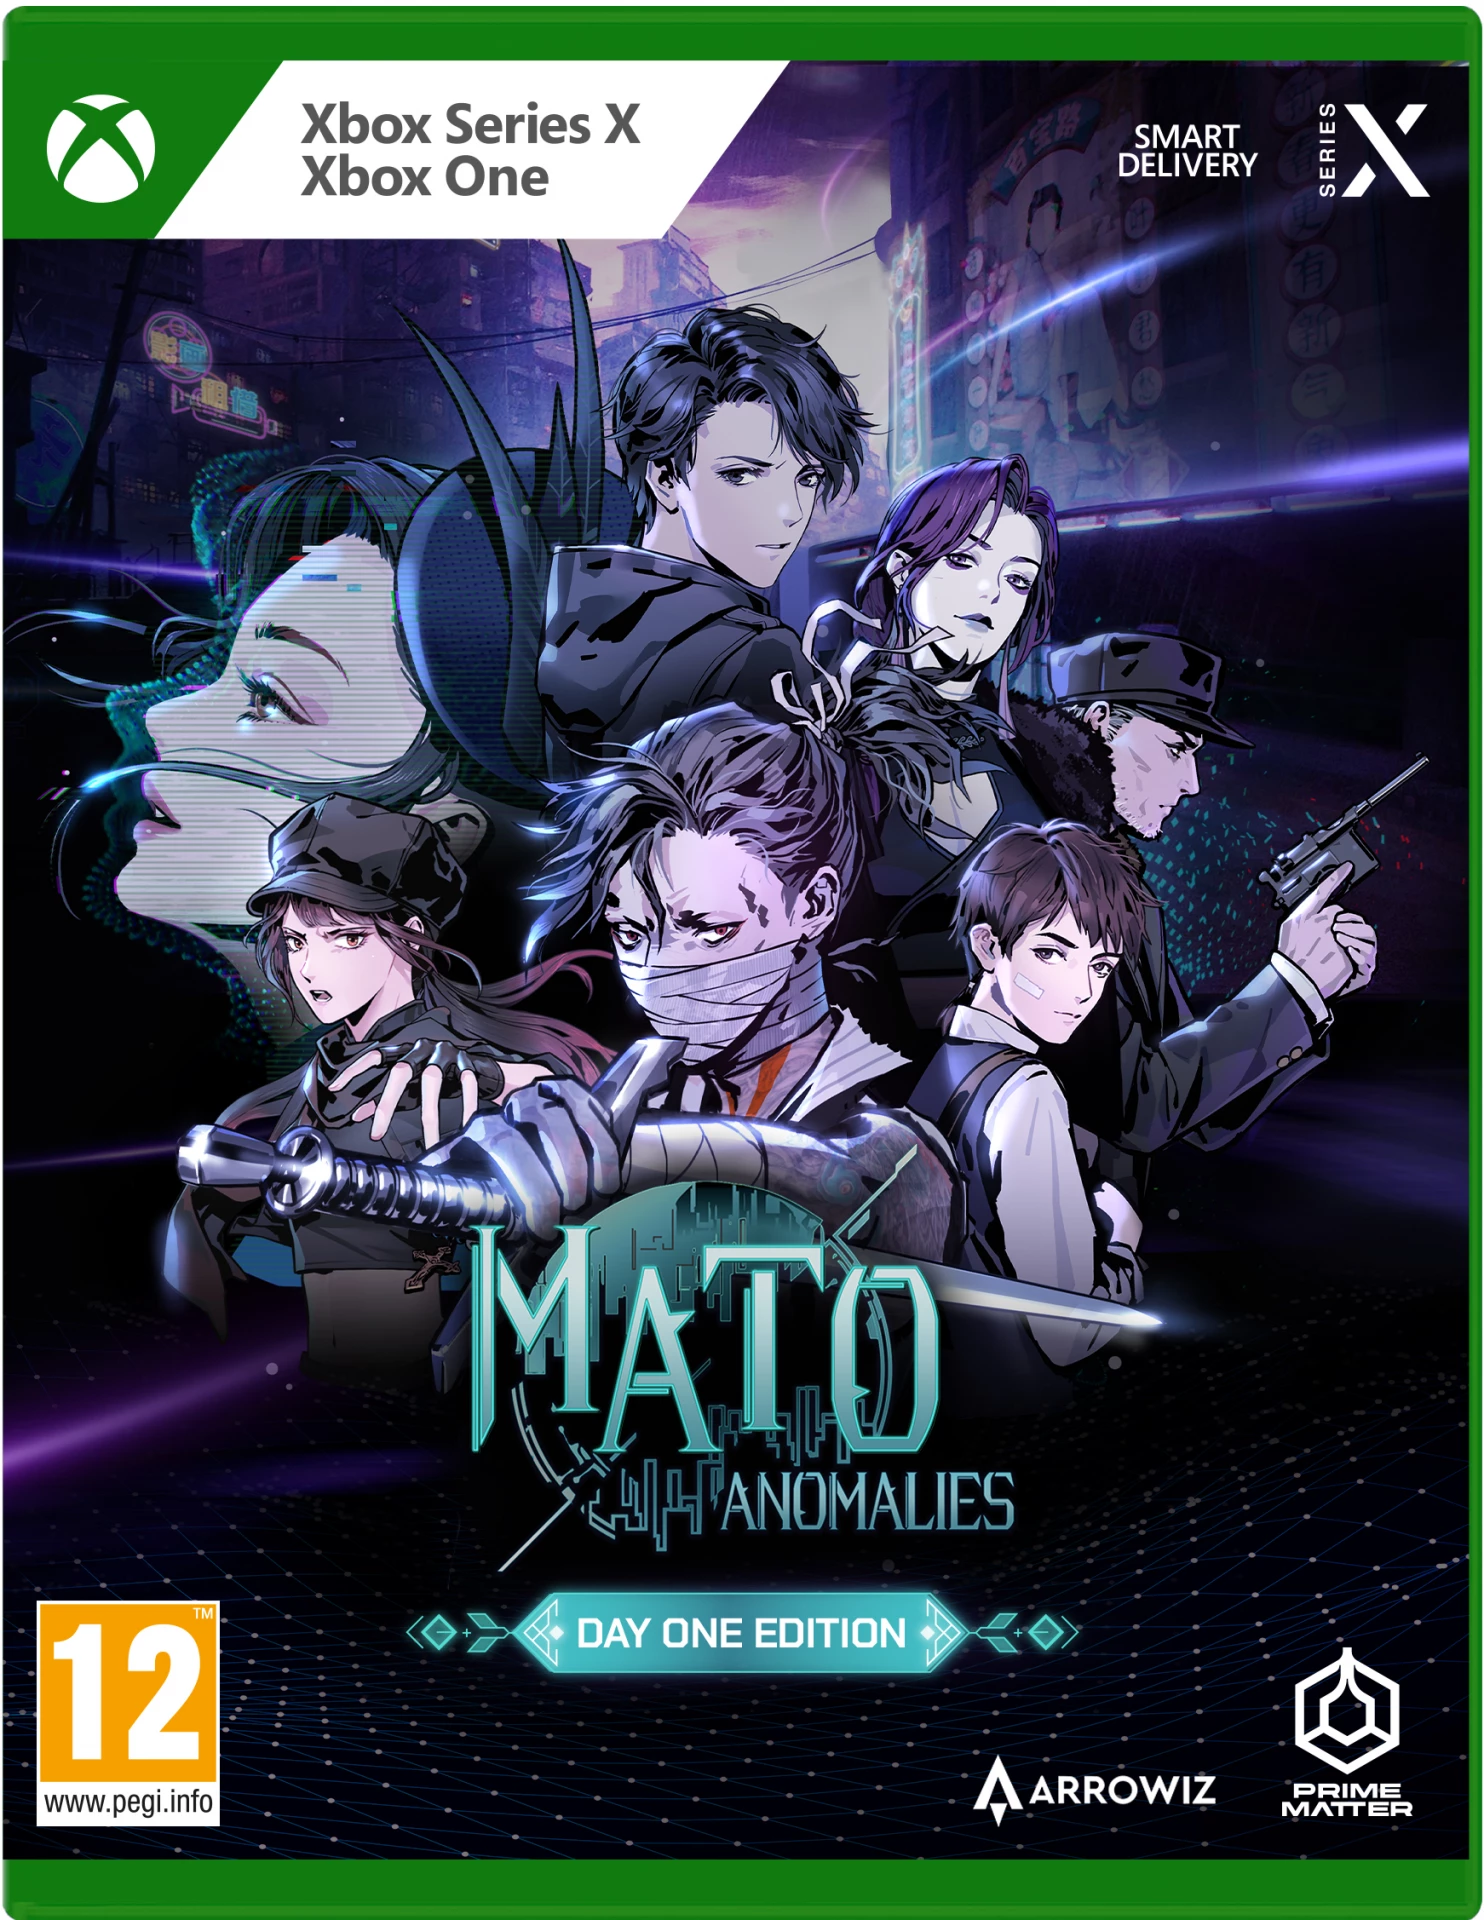 Mato: Anomalies - Day One Edition (Xbox One), Arrowiz, Prime Matter